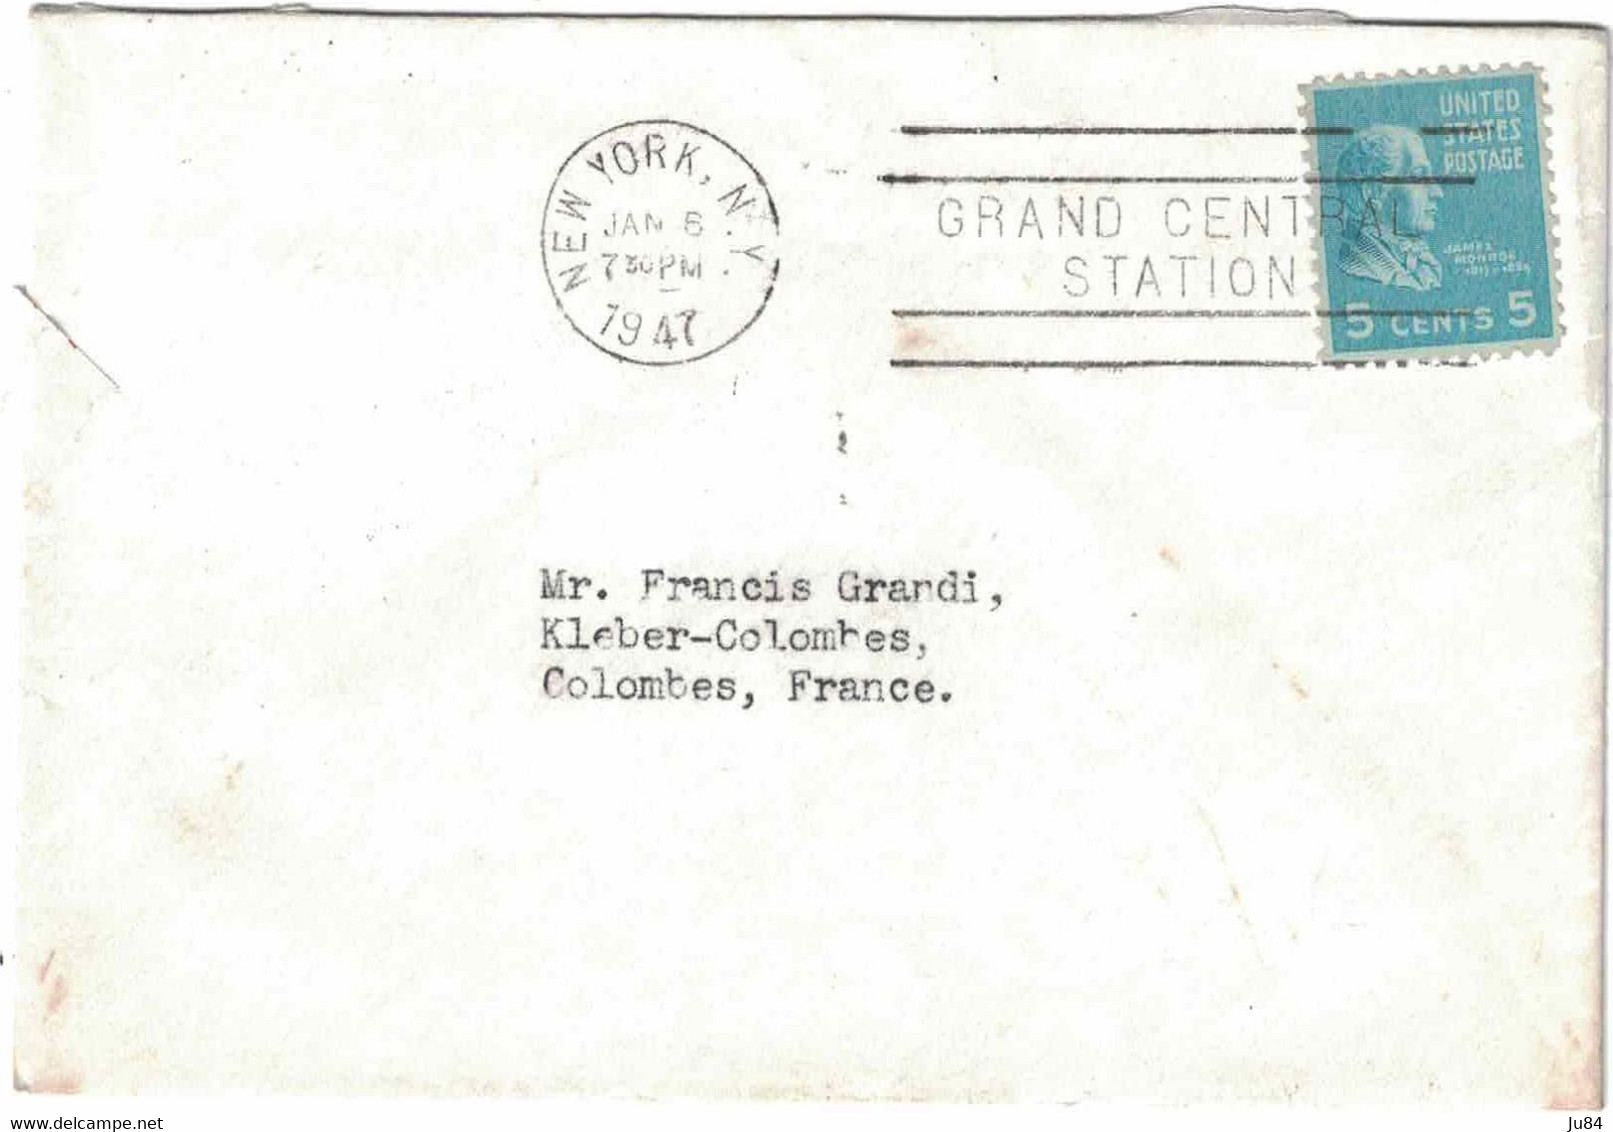 Etats-Unis - New York - Grand Central Station - Lettre Pour La France - Colombes - 6 Janvier 1947 - Used Stamps